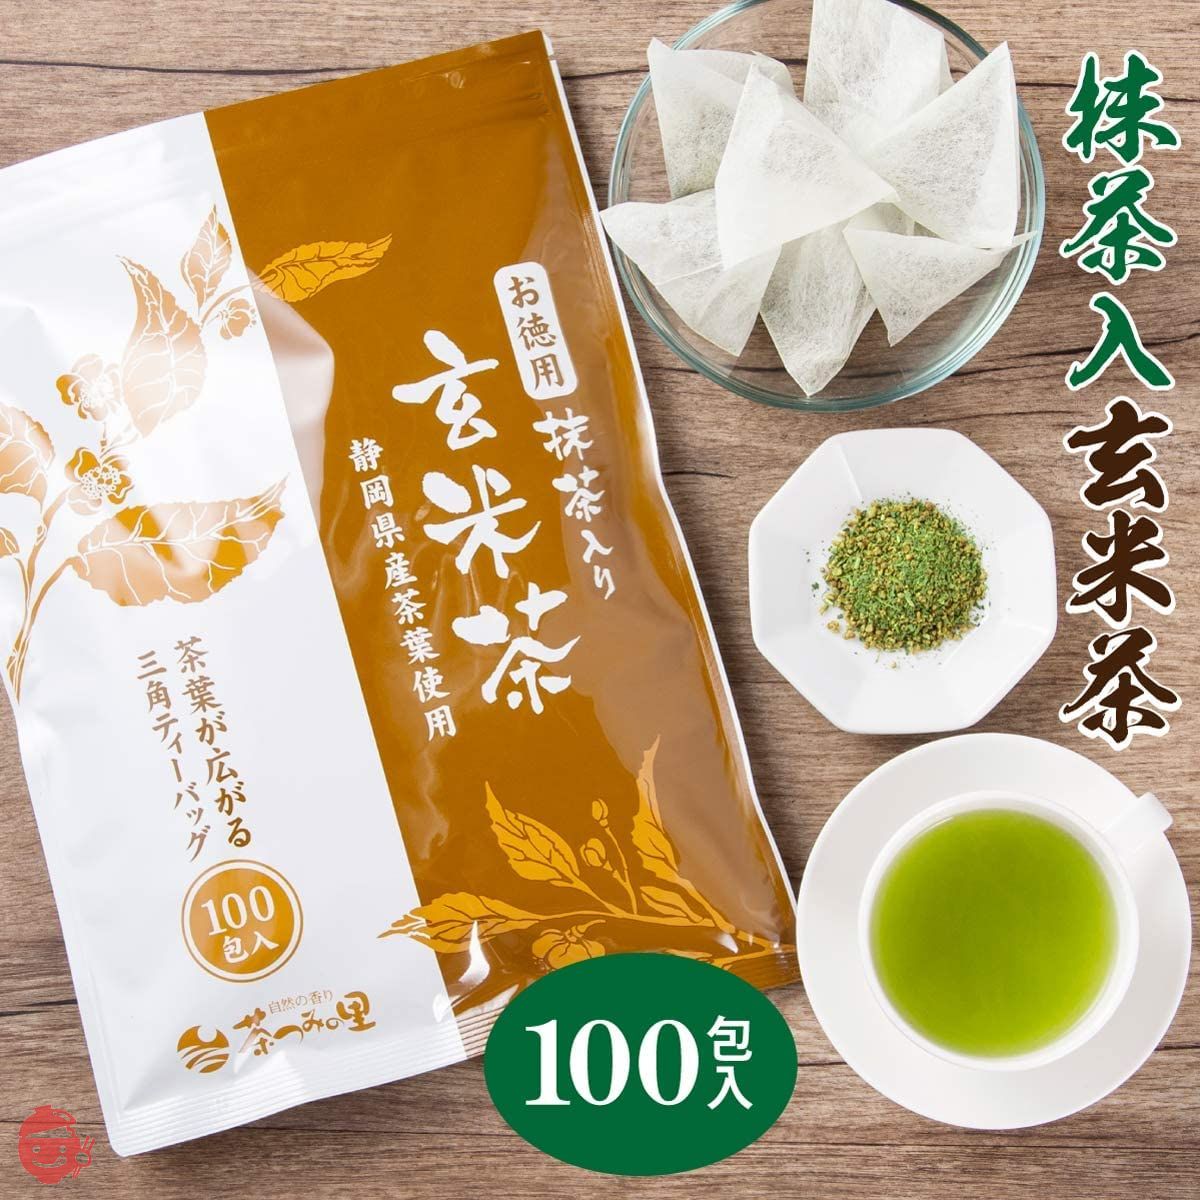 Tea Tsuminosato 超值玄米茶抹茶茶包2.5g x 100 茶包100 茶包静冈县 